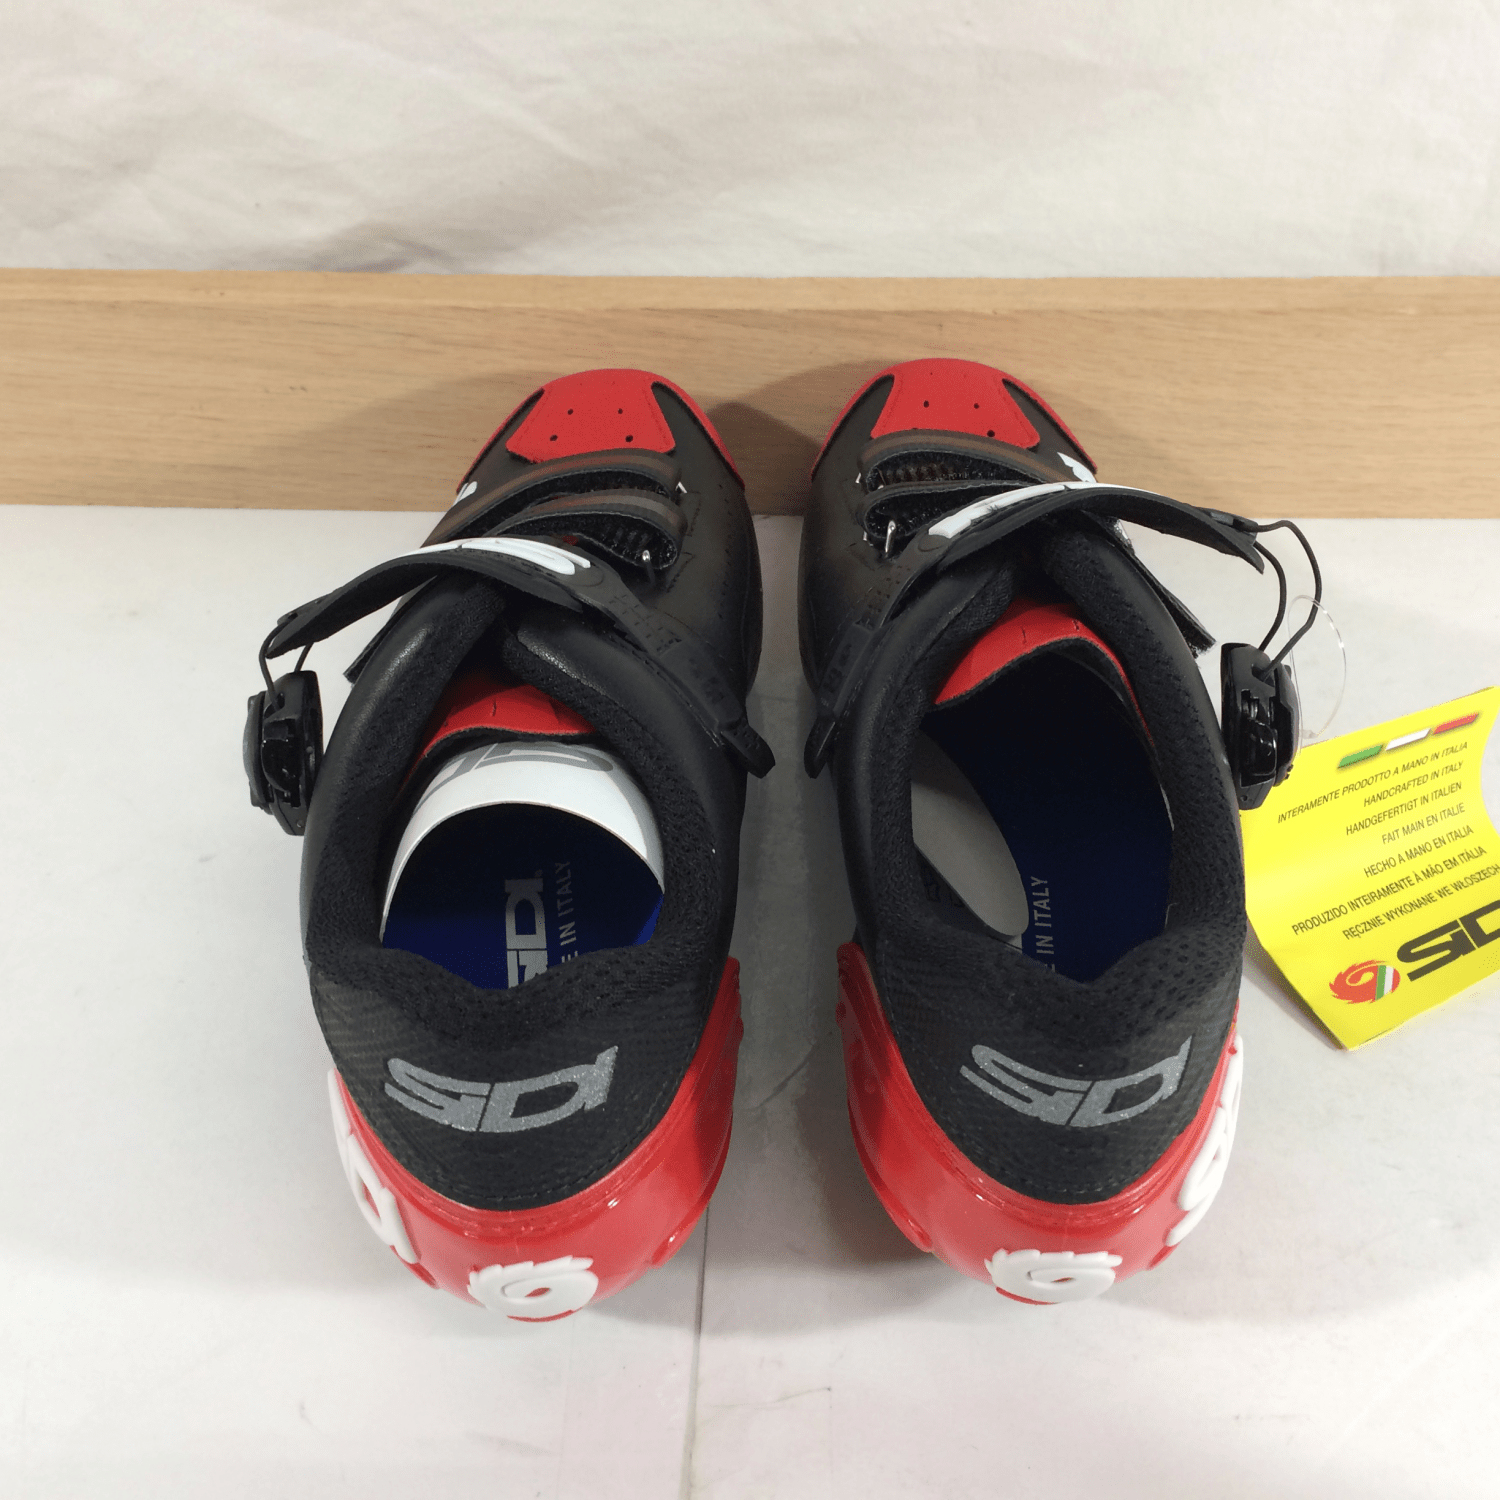 Like New / Open Box Sidi Alba 2 Men's Road Cycling Shoes, Black/Red, M41